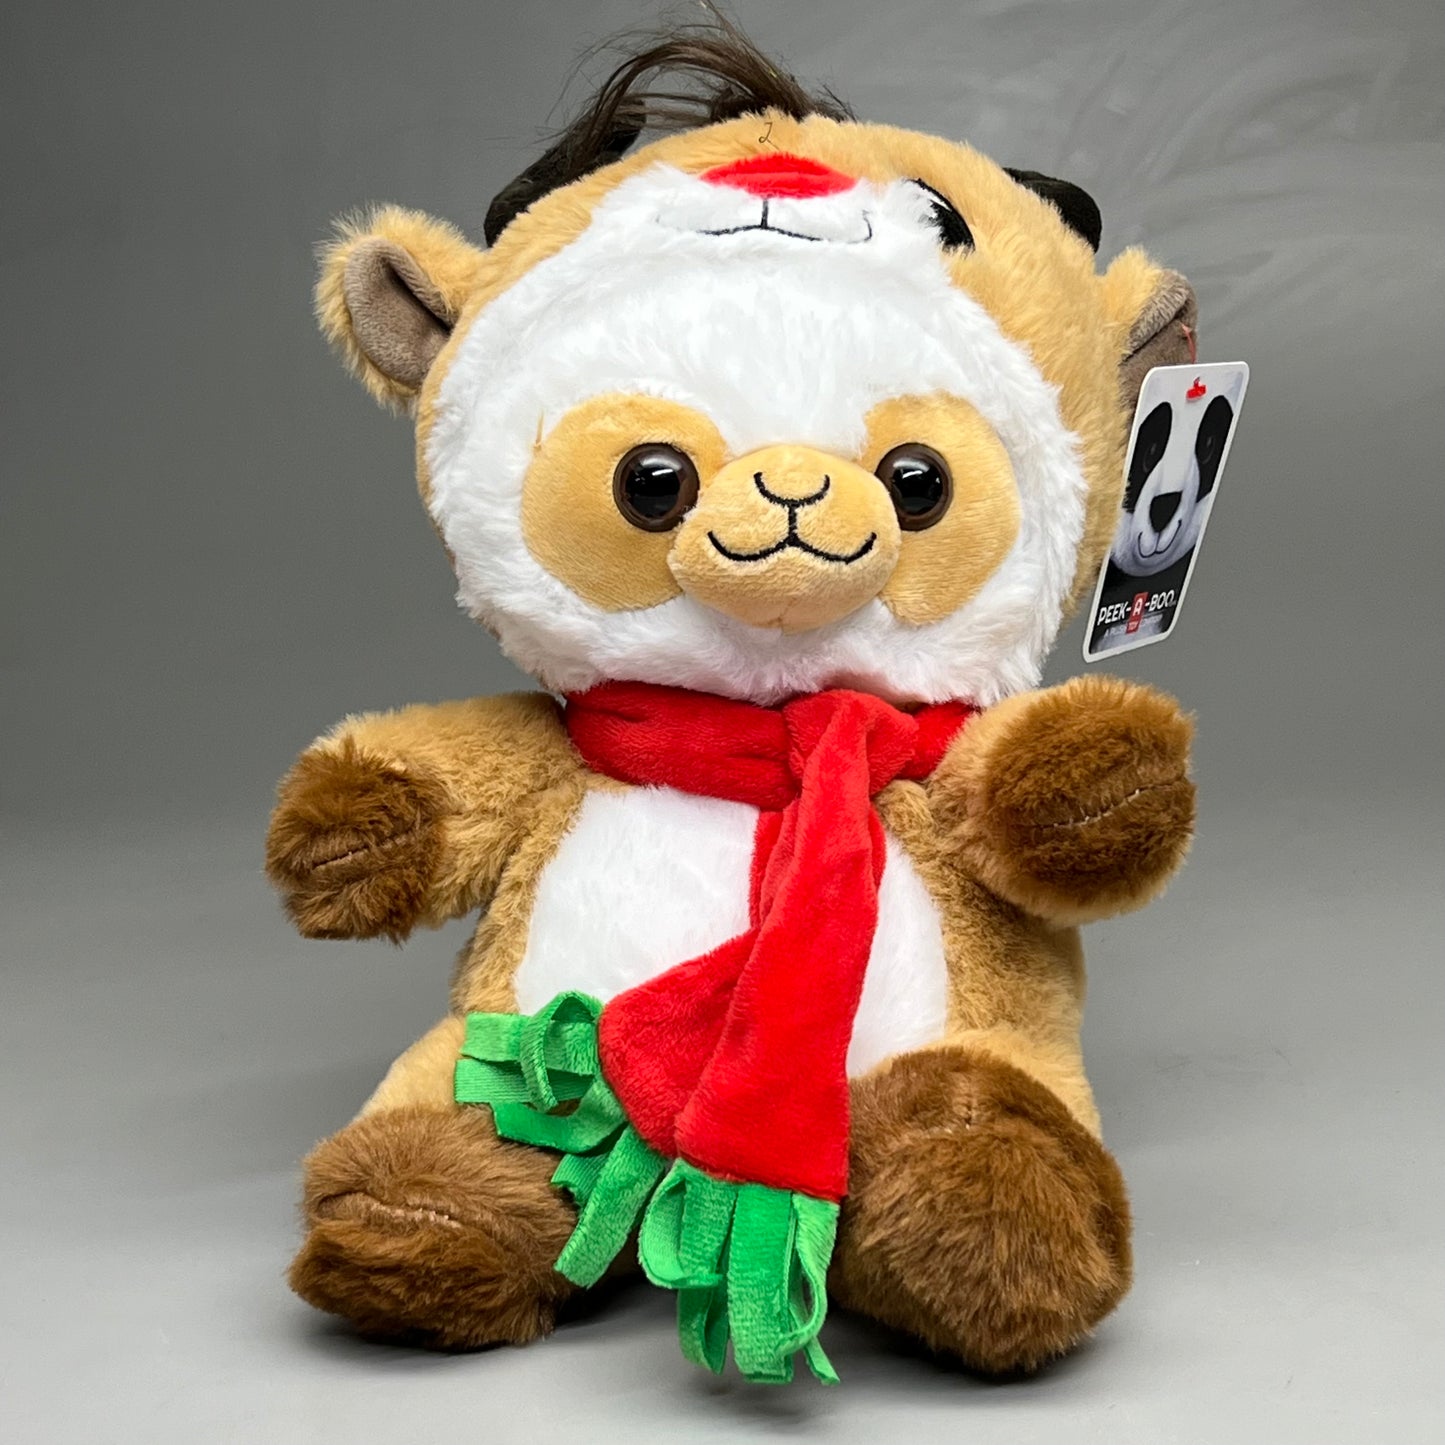 PEEK A BOO TOYS Monkey Reindeer Stuffed Animal XMASDIS30